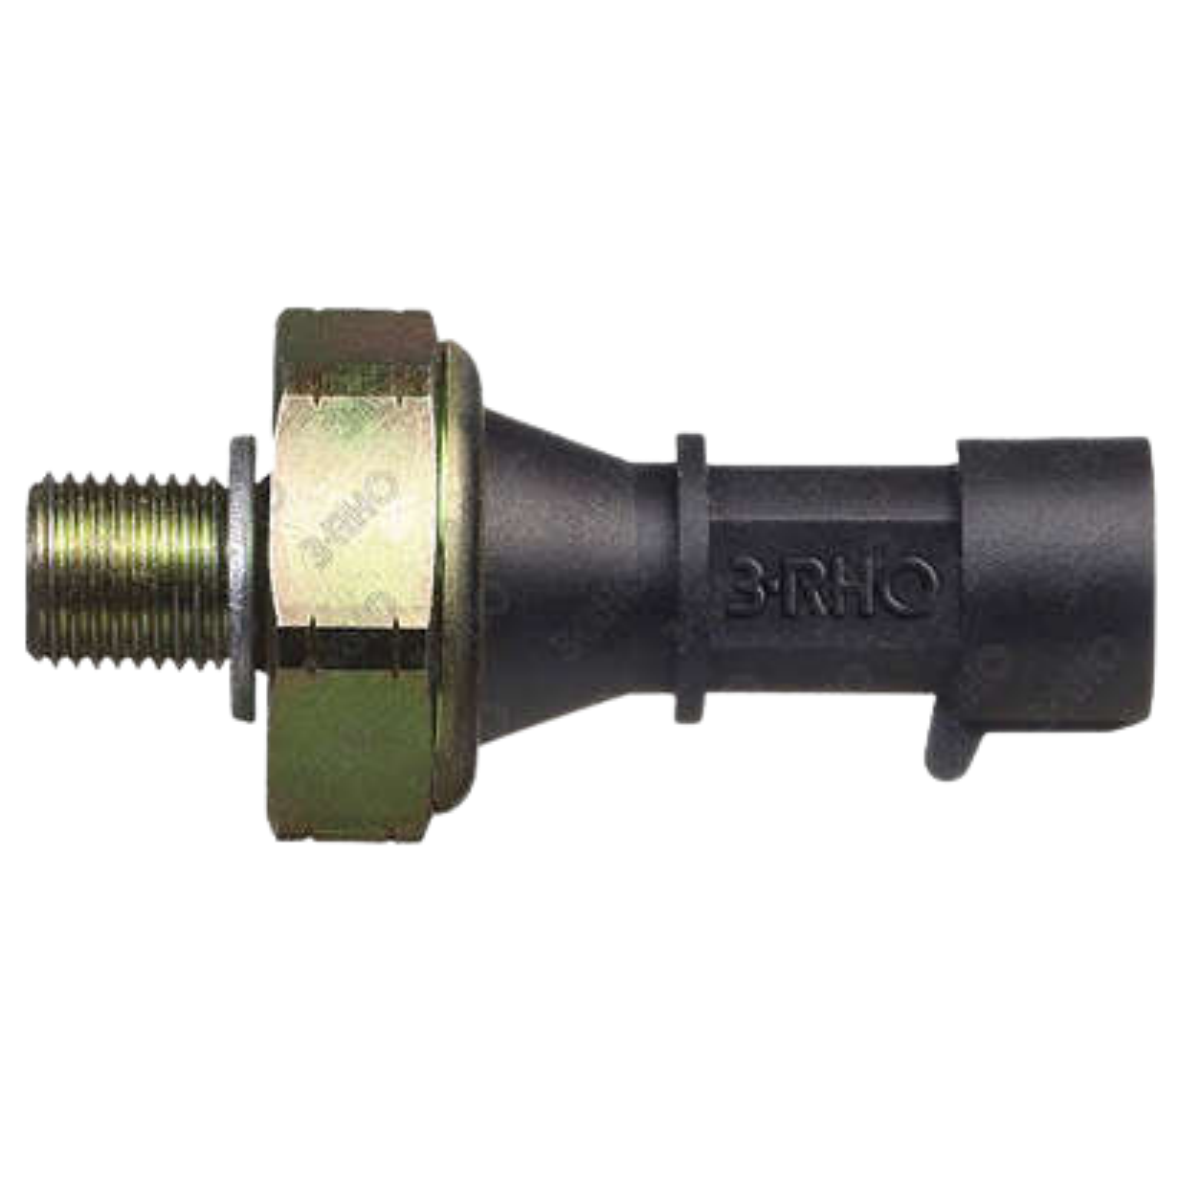 Interruptor Oleo Fiat Toro 2.0 Diesel 3-rho 33111-3rho